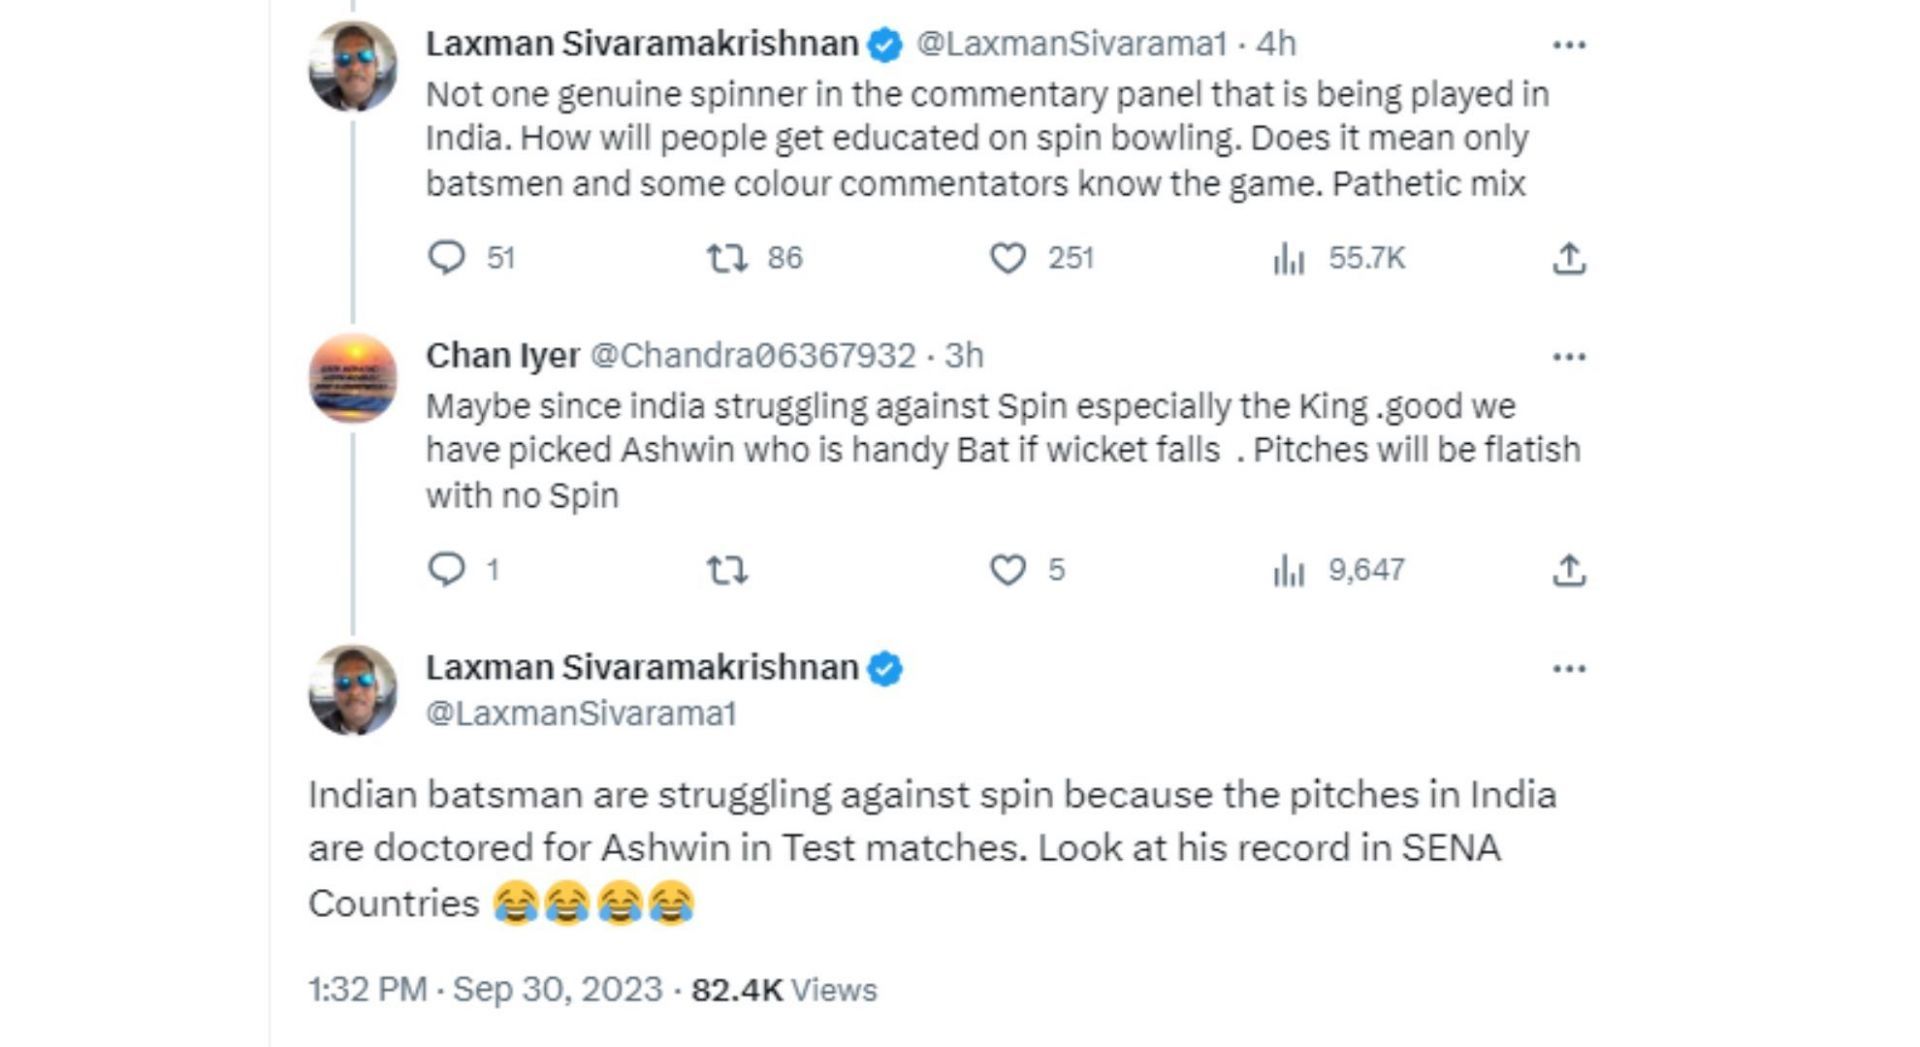 A screenshot of the conversation between Laxman Sivaramakrishnan and the fan on X.